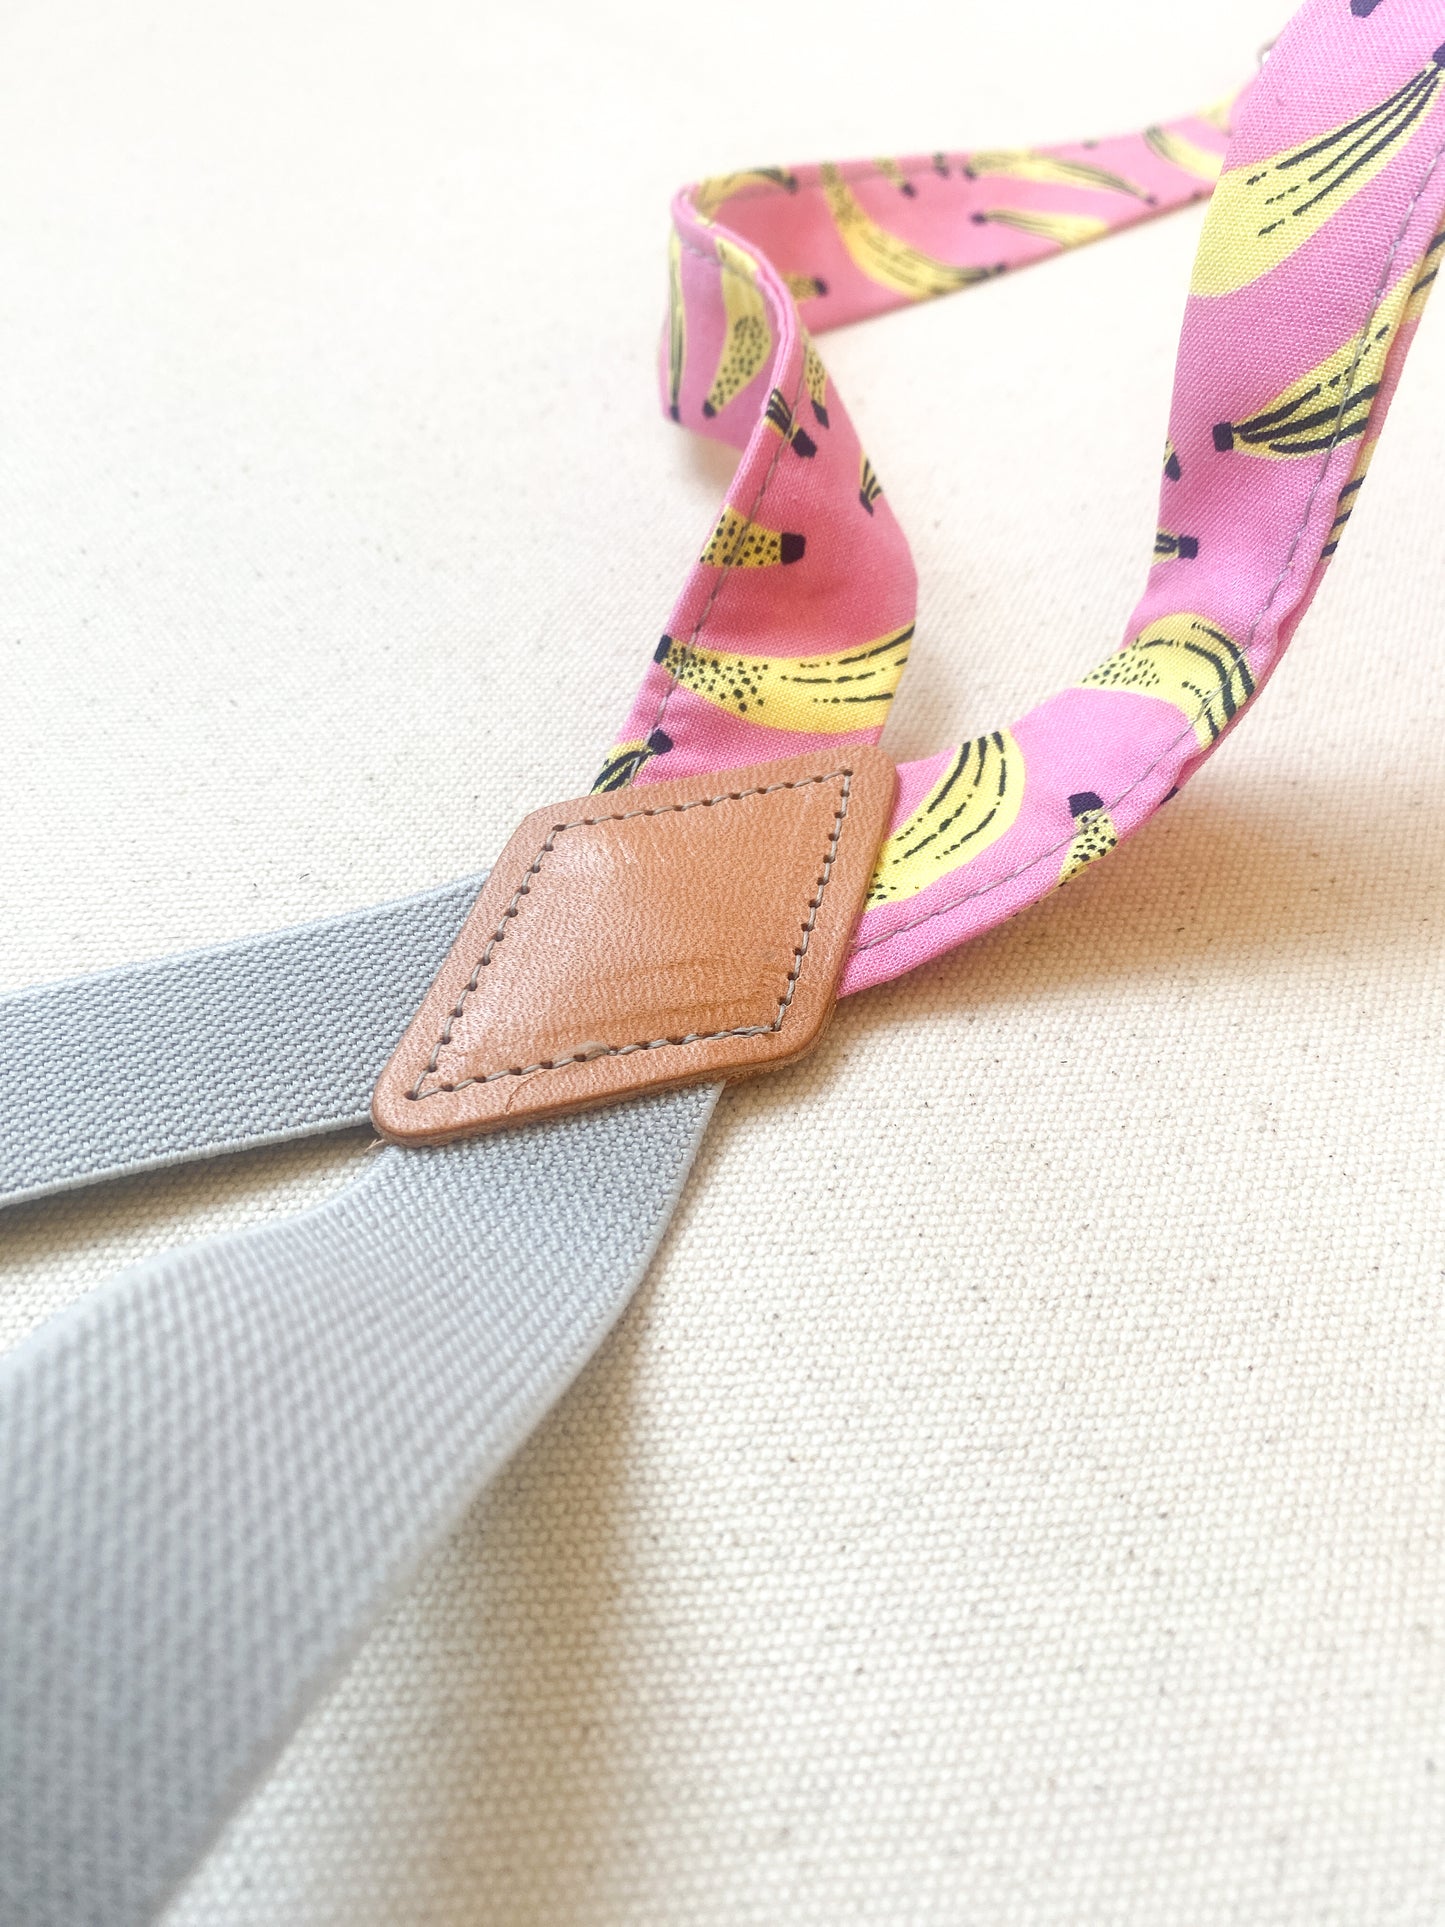 S+W Fabric Suspenders